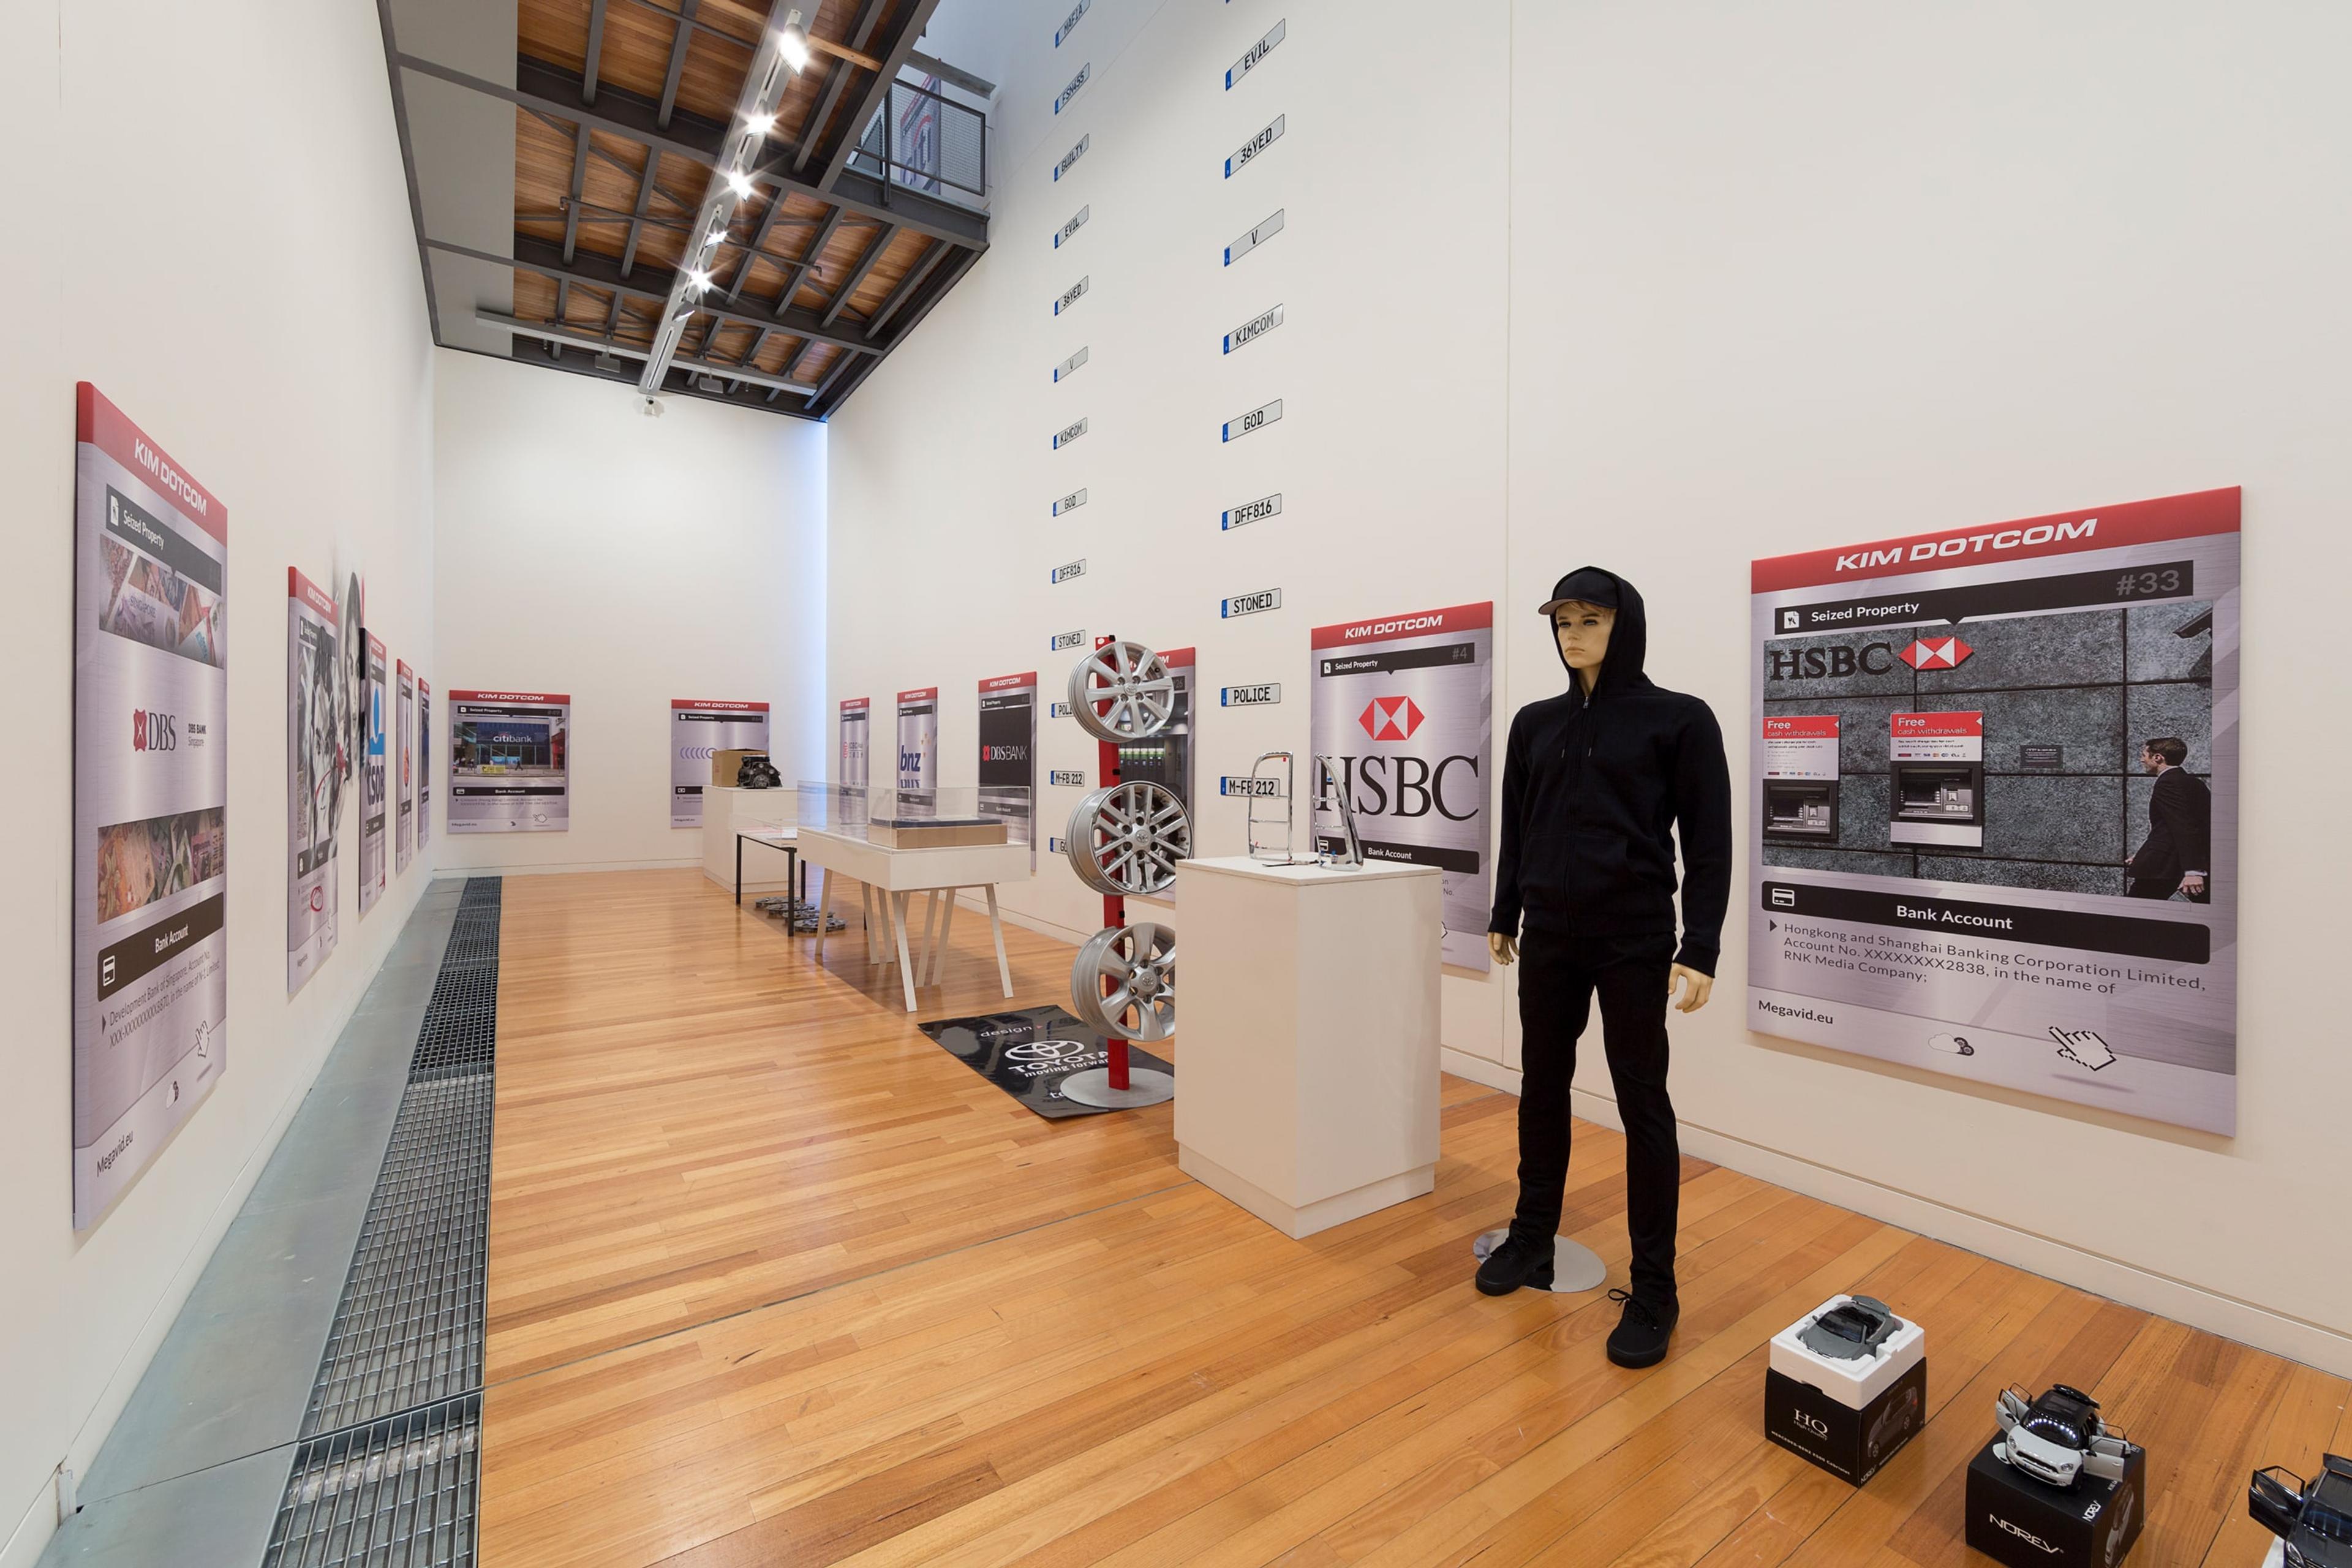 Simon Denny, The Personal Effects of Kim Dotcom 2014, installation view at the Adam Art Gallery, Victoria University of Wellington ©Simon Denny (photo: Shaun Waugh).